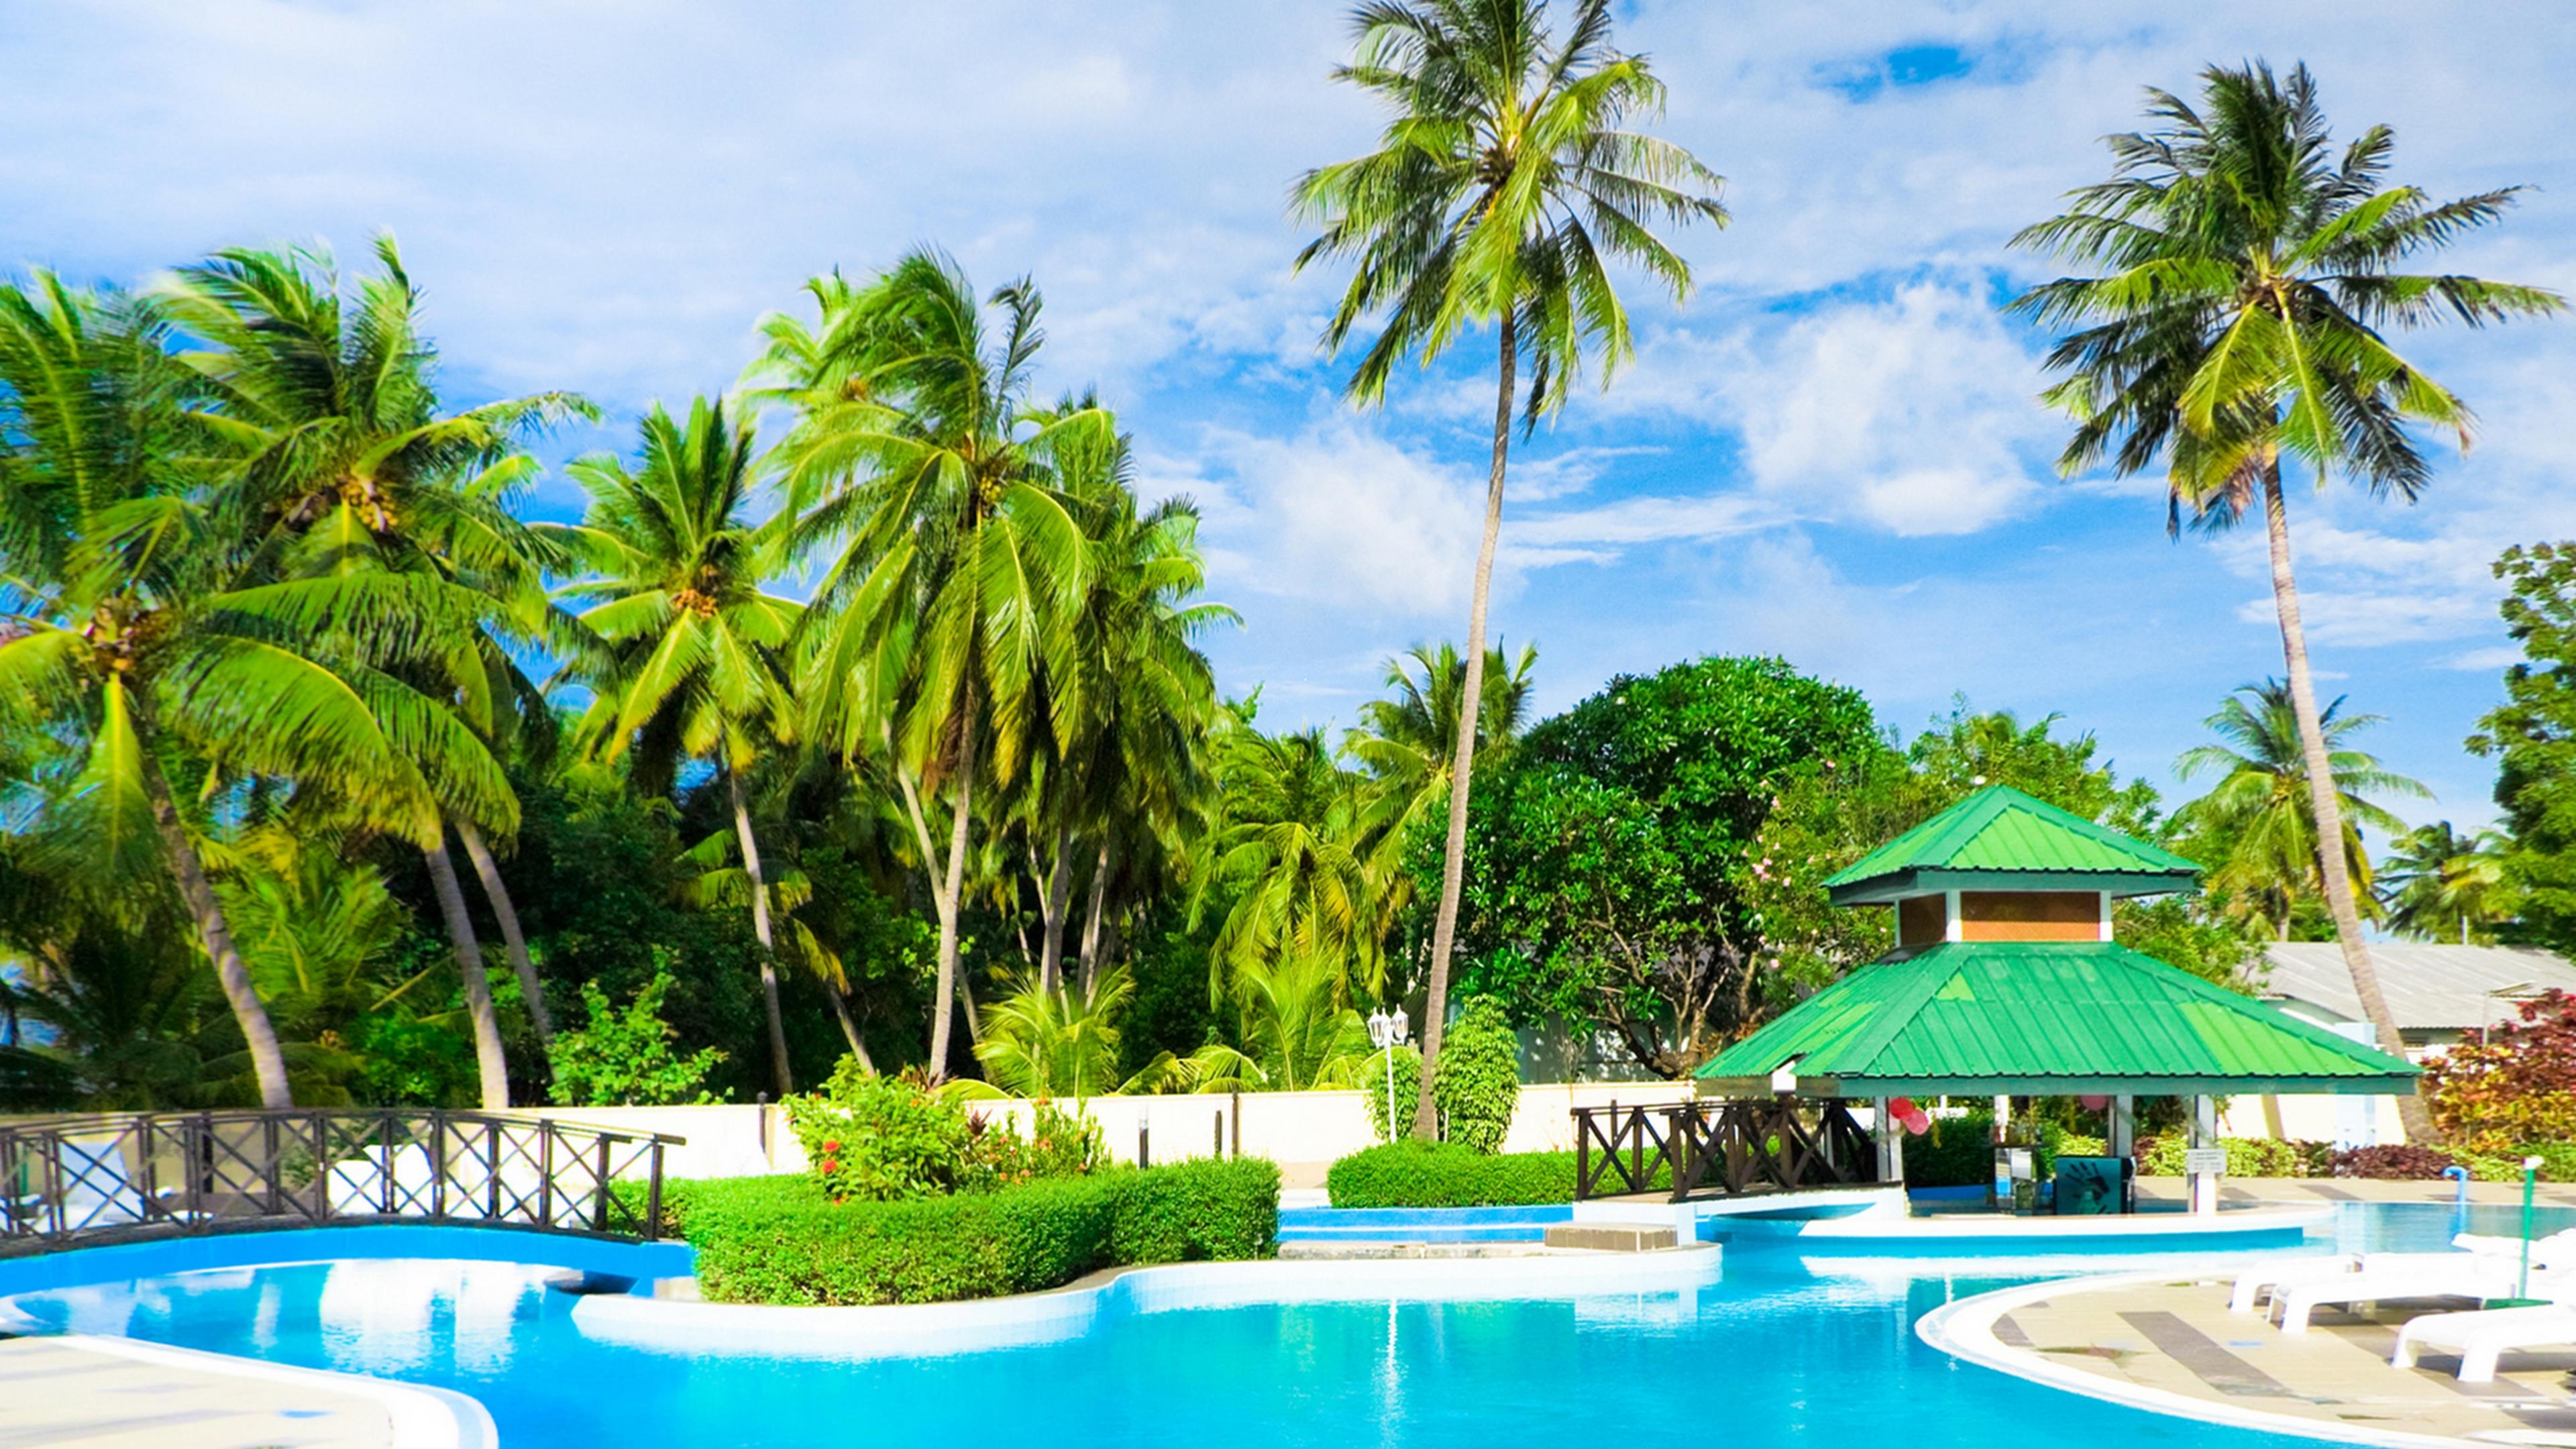 resort, man made, gazebo, palm tree, pool, tropical